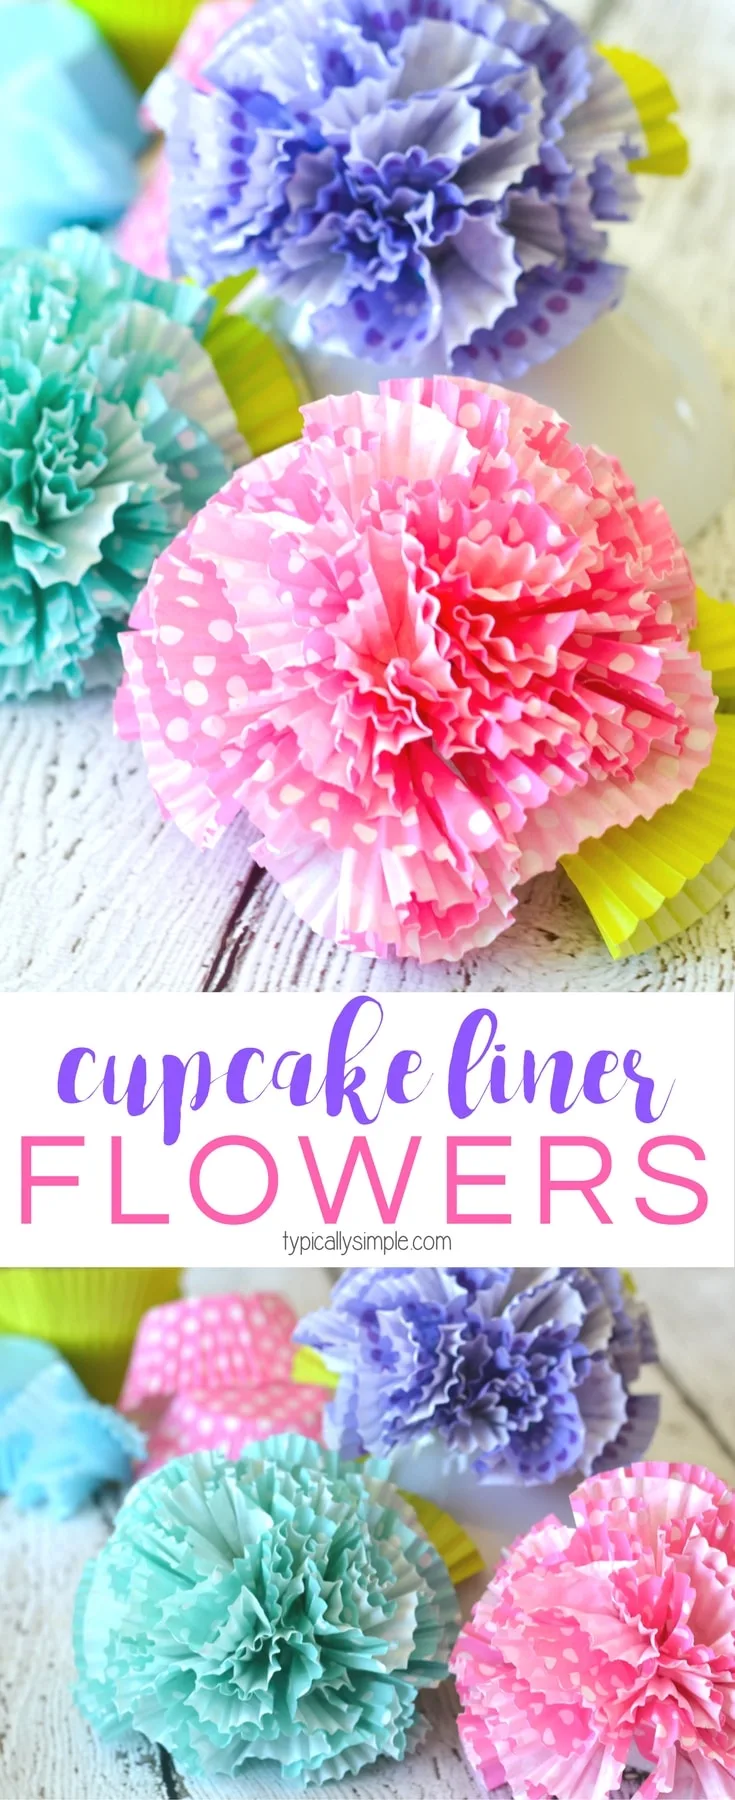 https://typicallysimple.com/wp-content/uploads/2016/03/cupcake-liner-flowers.jpg.webp